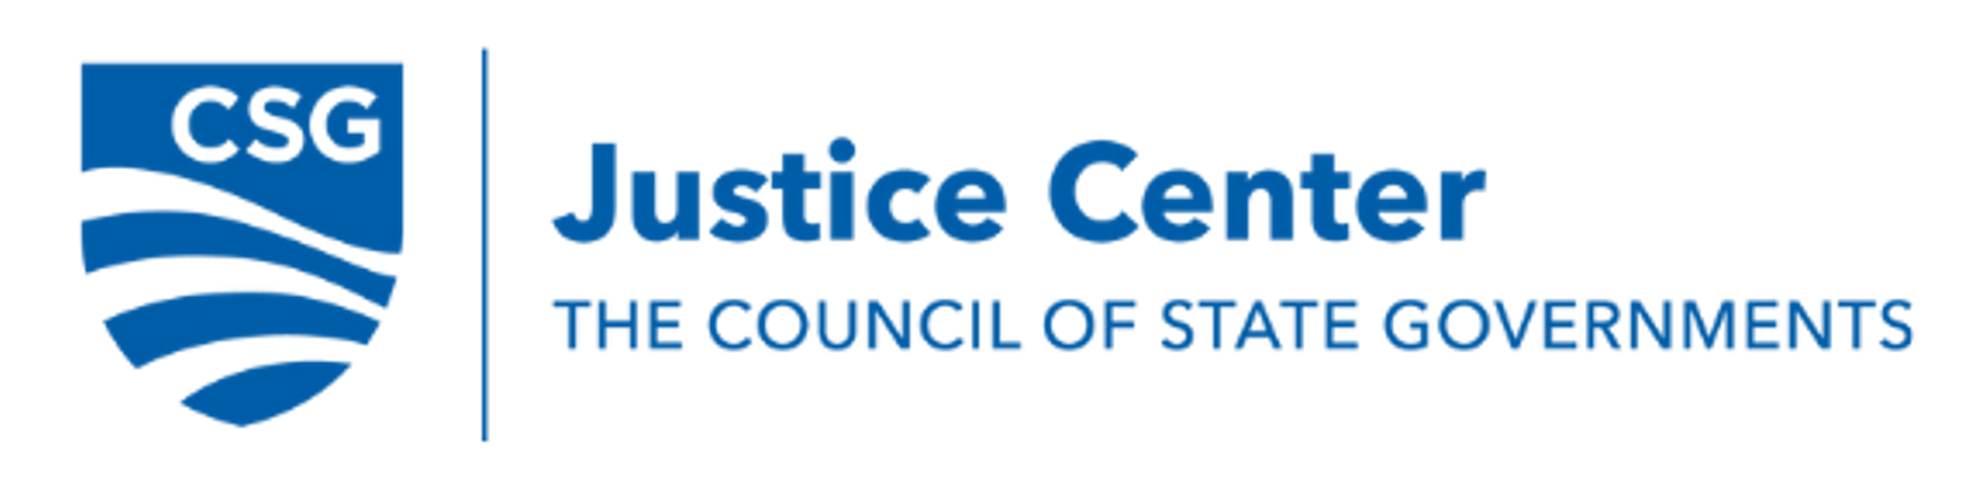 CSG Justice Center Logo